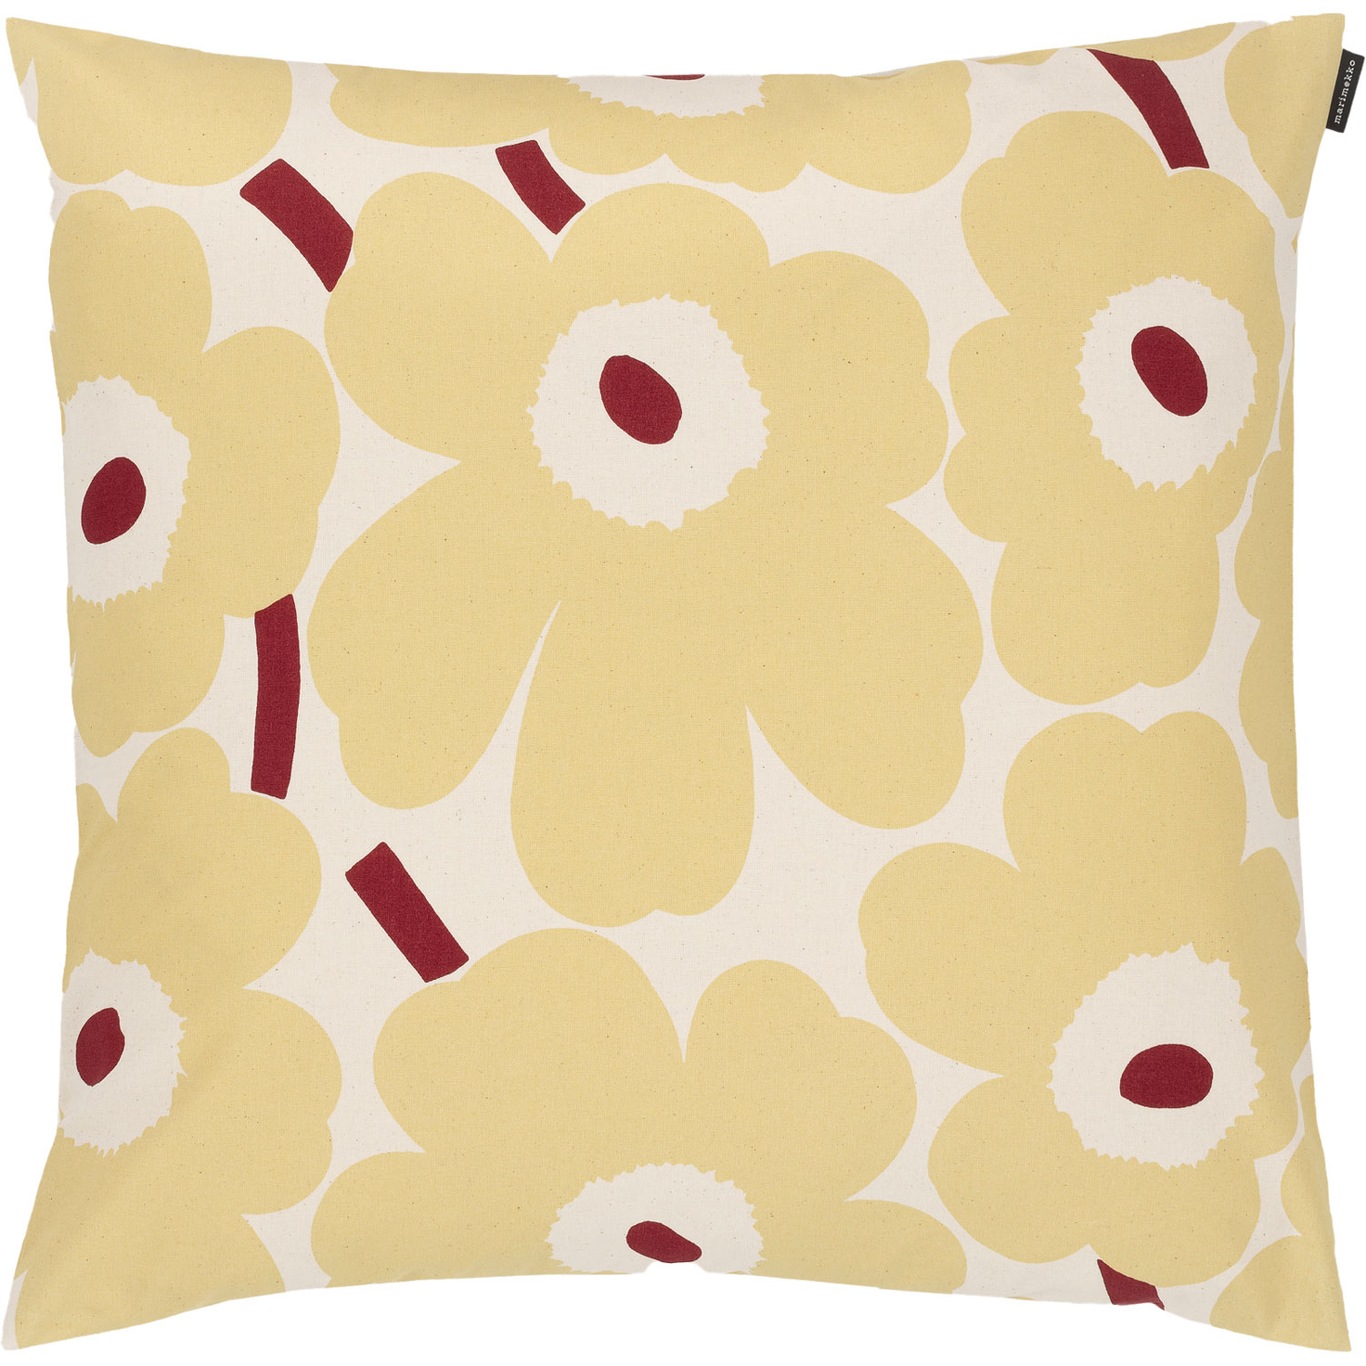 Pieni Unikko Cushion Cover 50x50 cm, Red / Butter Yellow / Cotton